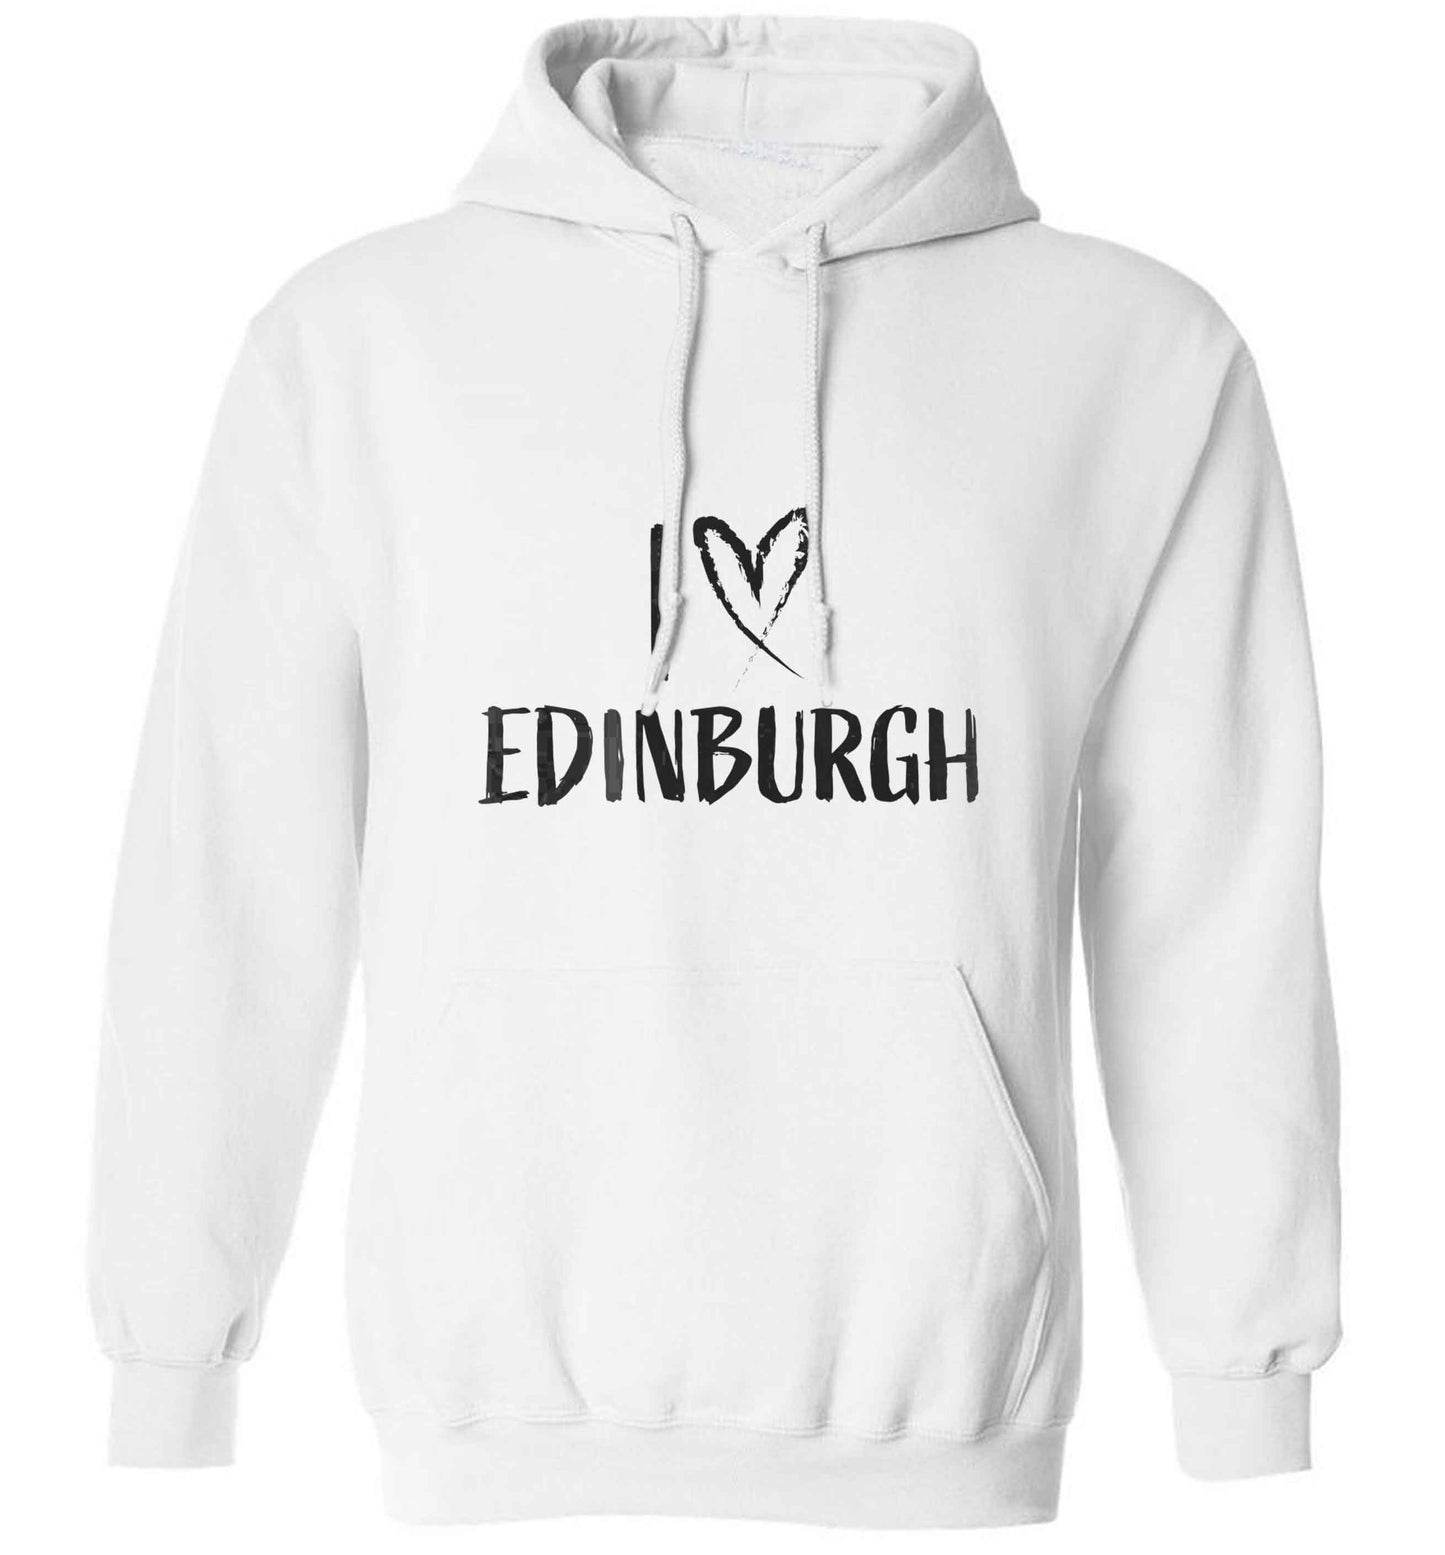 I love Edinburgh adults unisex white hoodie 2XL